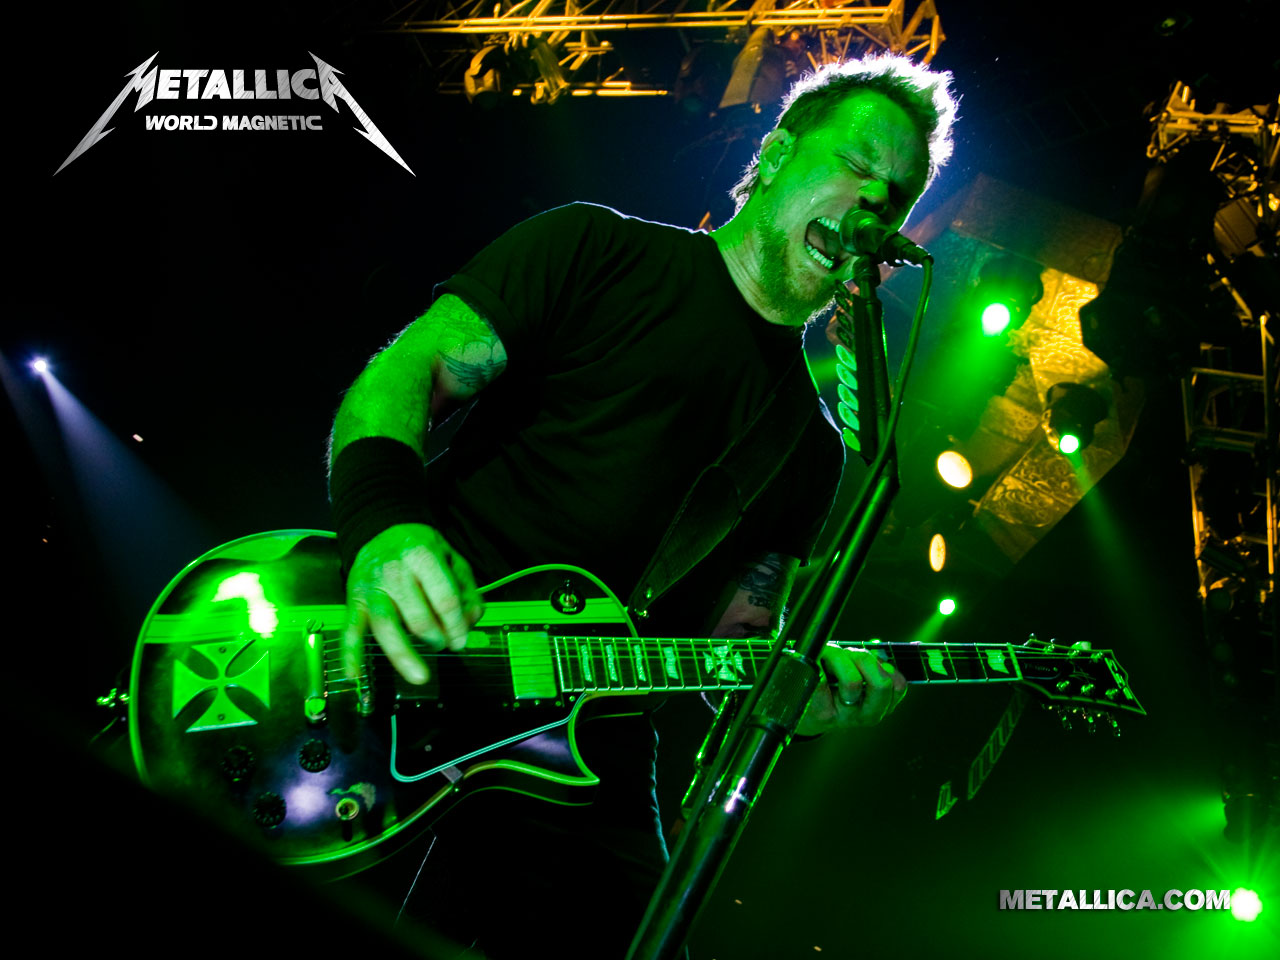 Wallpaper HD De Metallica